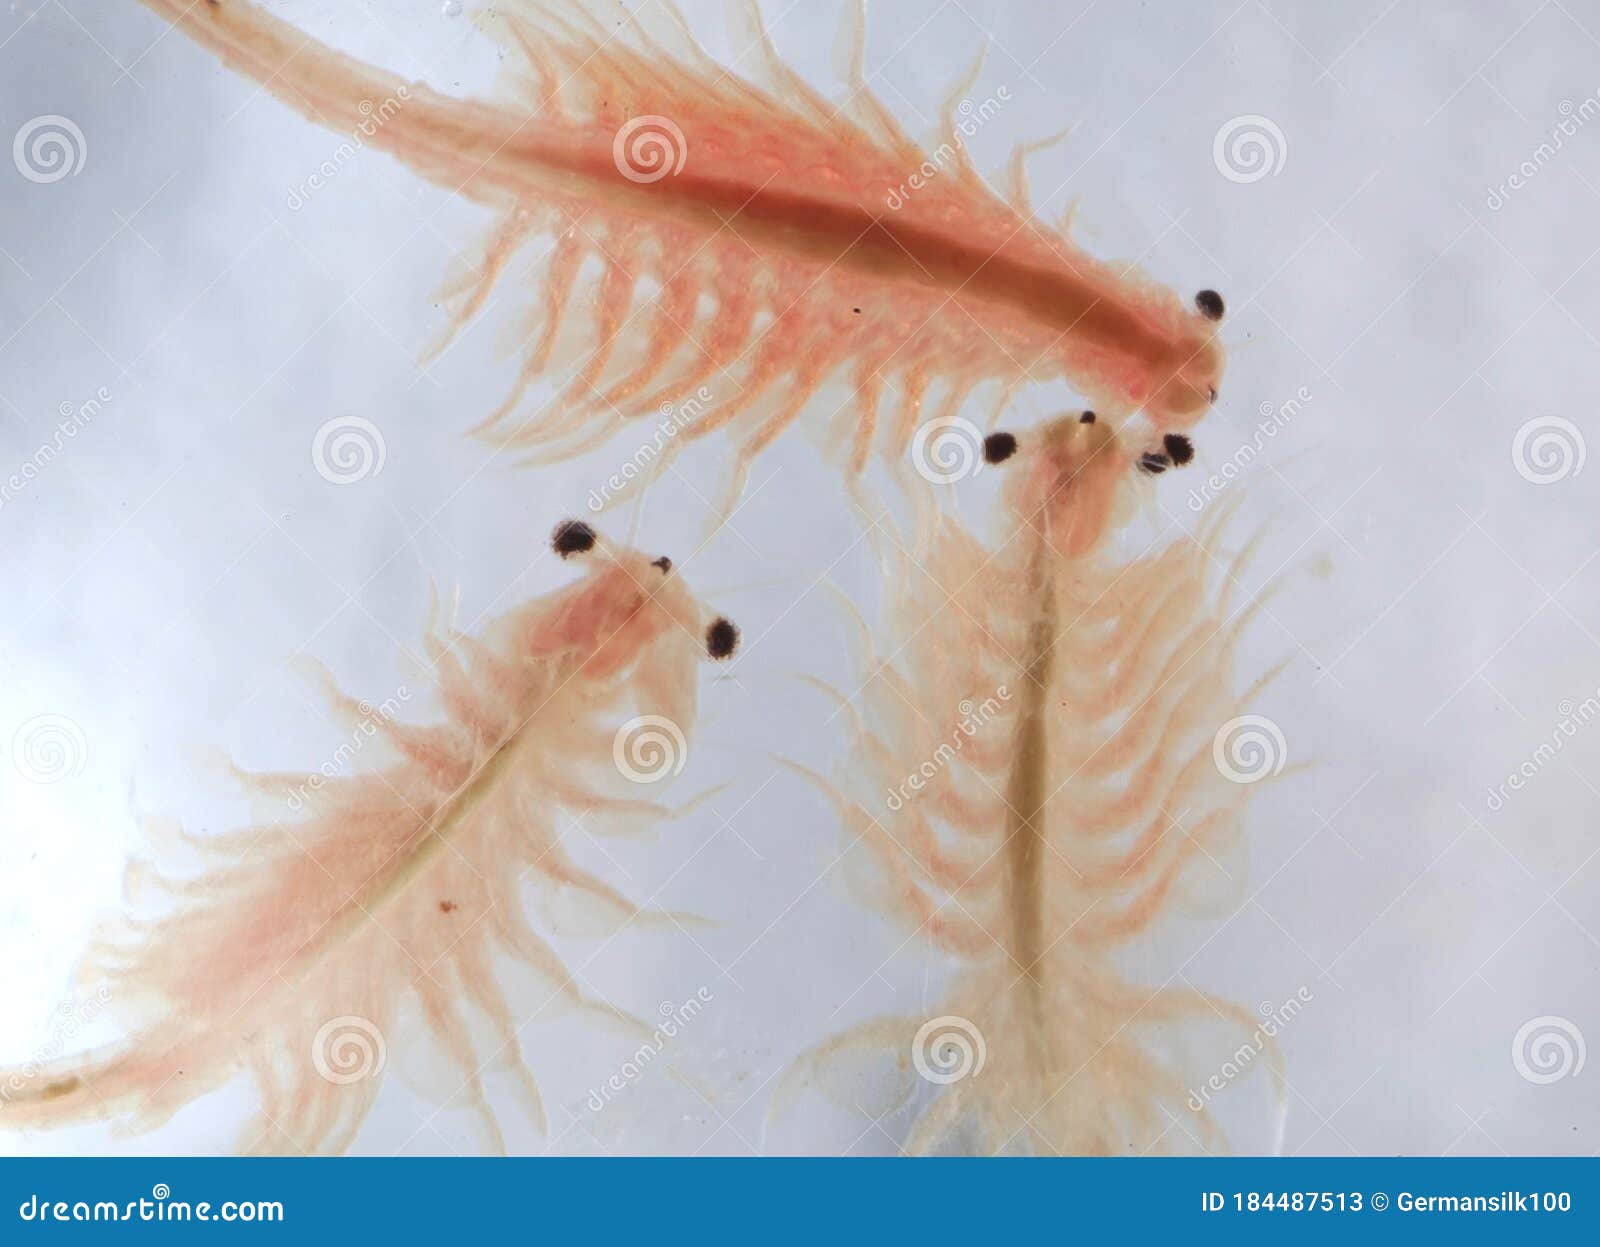 Super Macro Close Up of Artemia Salina Stock Image - Image of legs,  crustaceans: 184487513